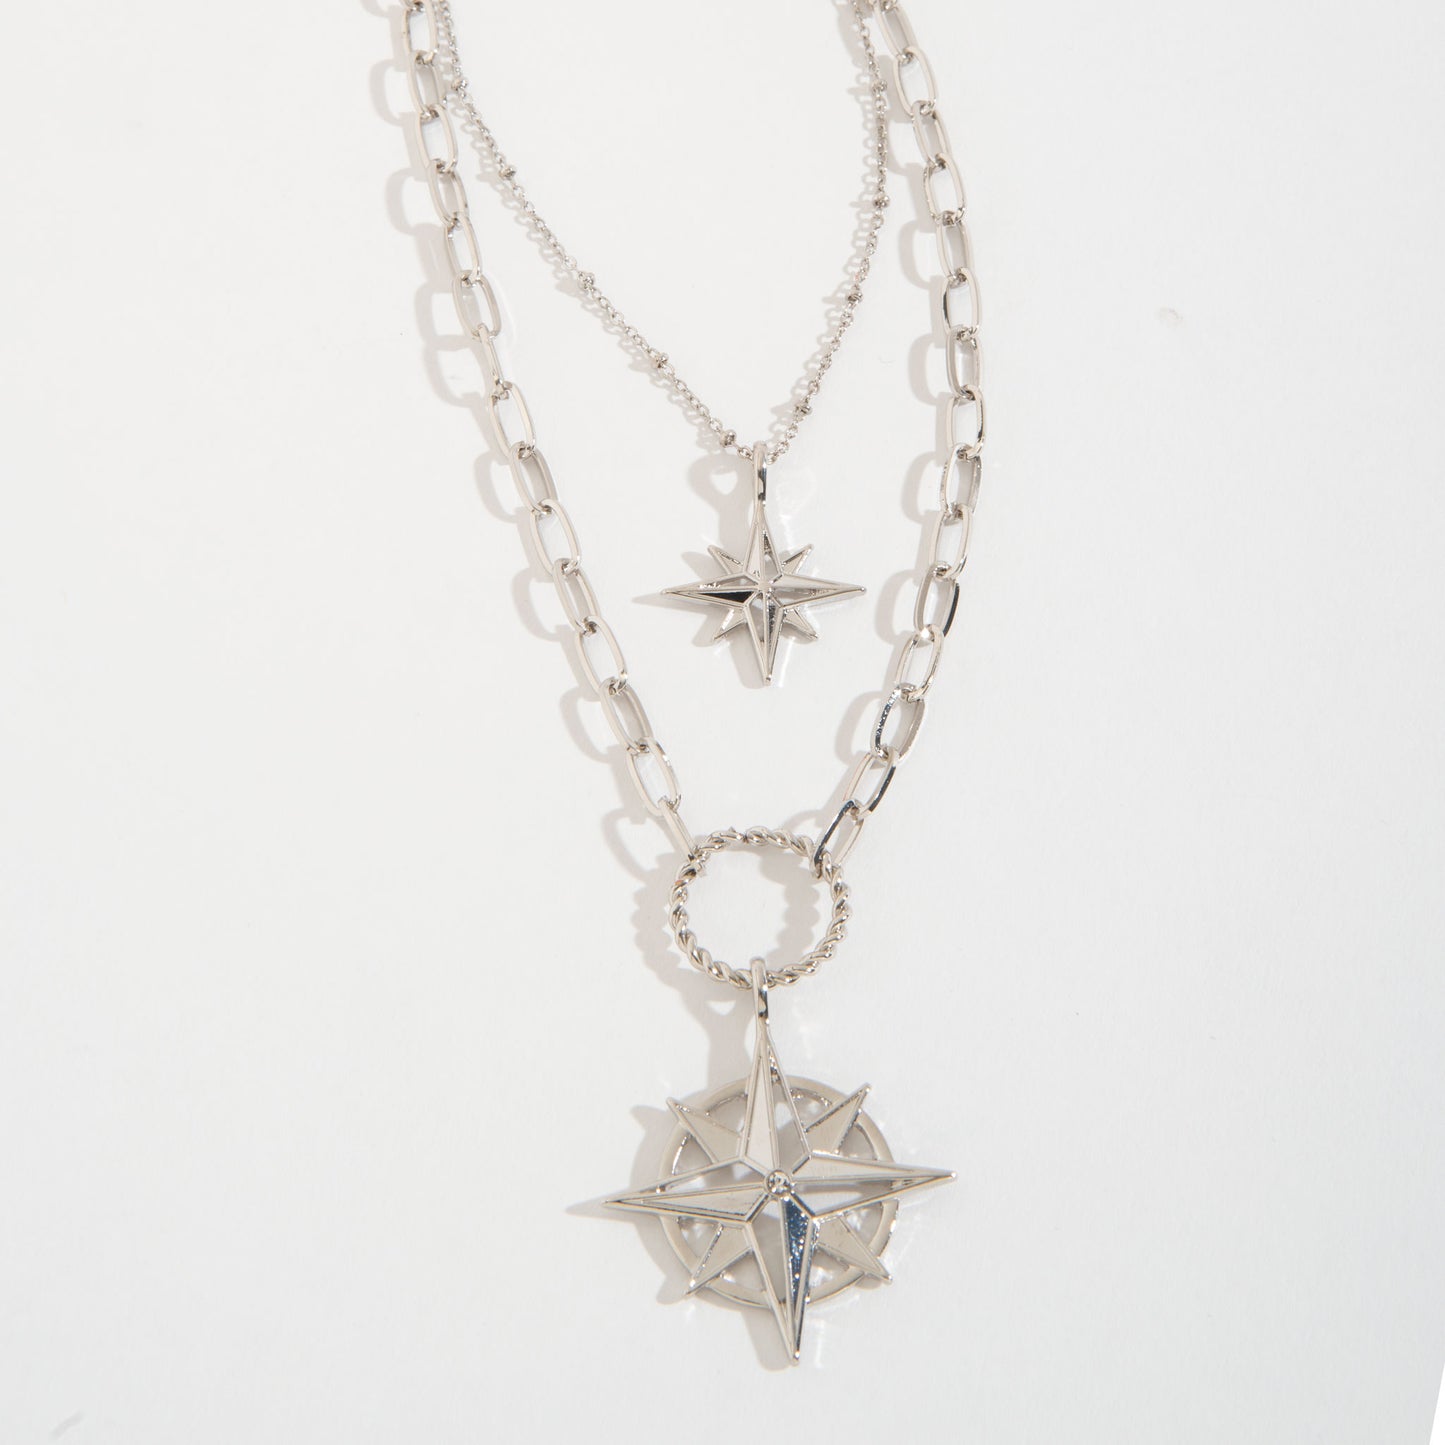 Luna Layered Compass Pendant Necklace